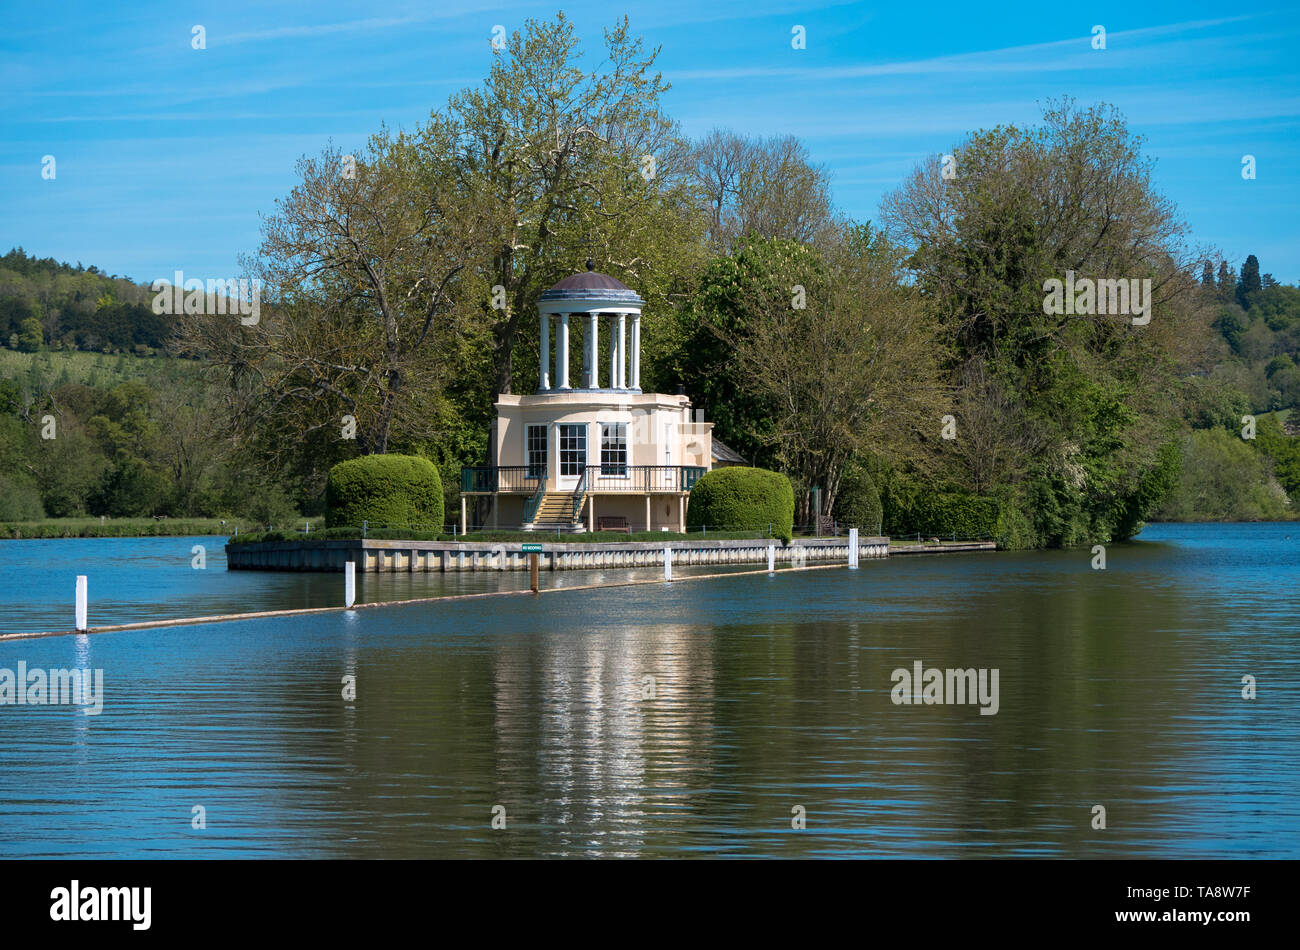 Tempel der Insel, Ausgangspunkt für Henley Royal Regatta, Henley-on-Thames, Oxfordshire, England, UK, GB. Stockfoto